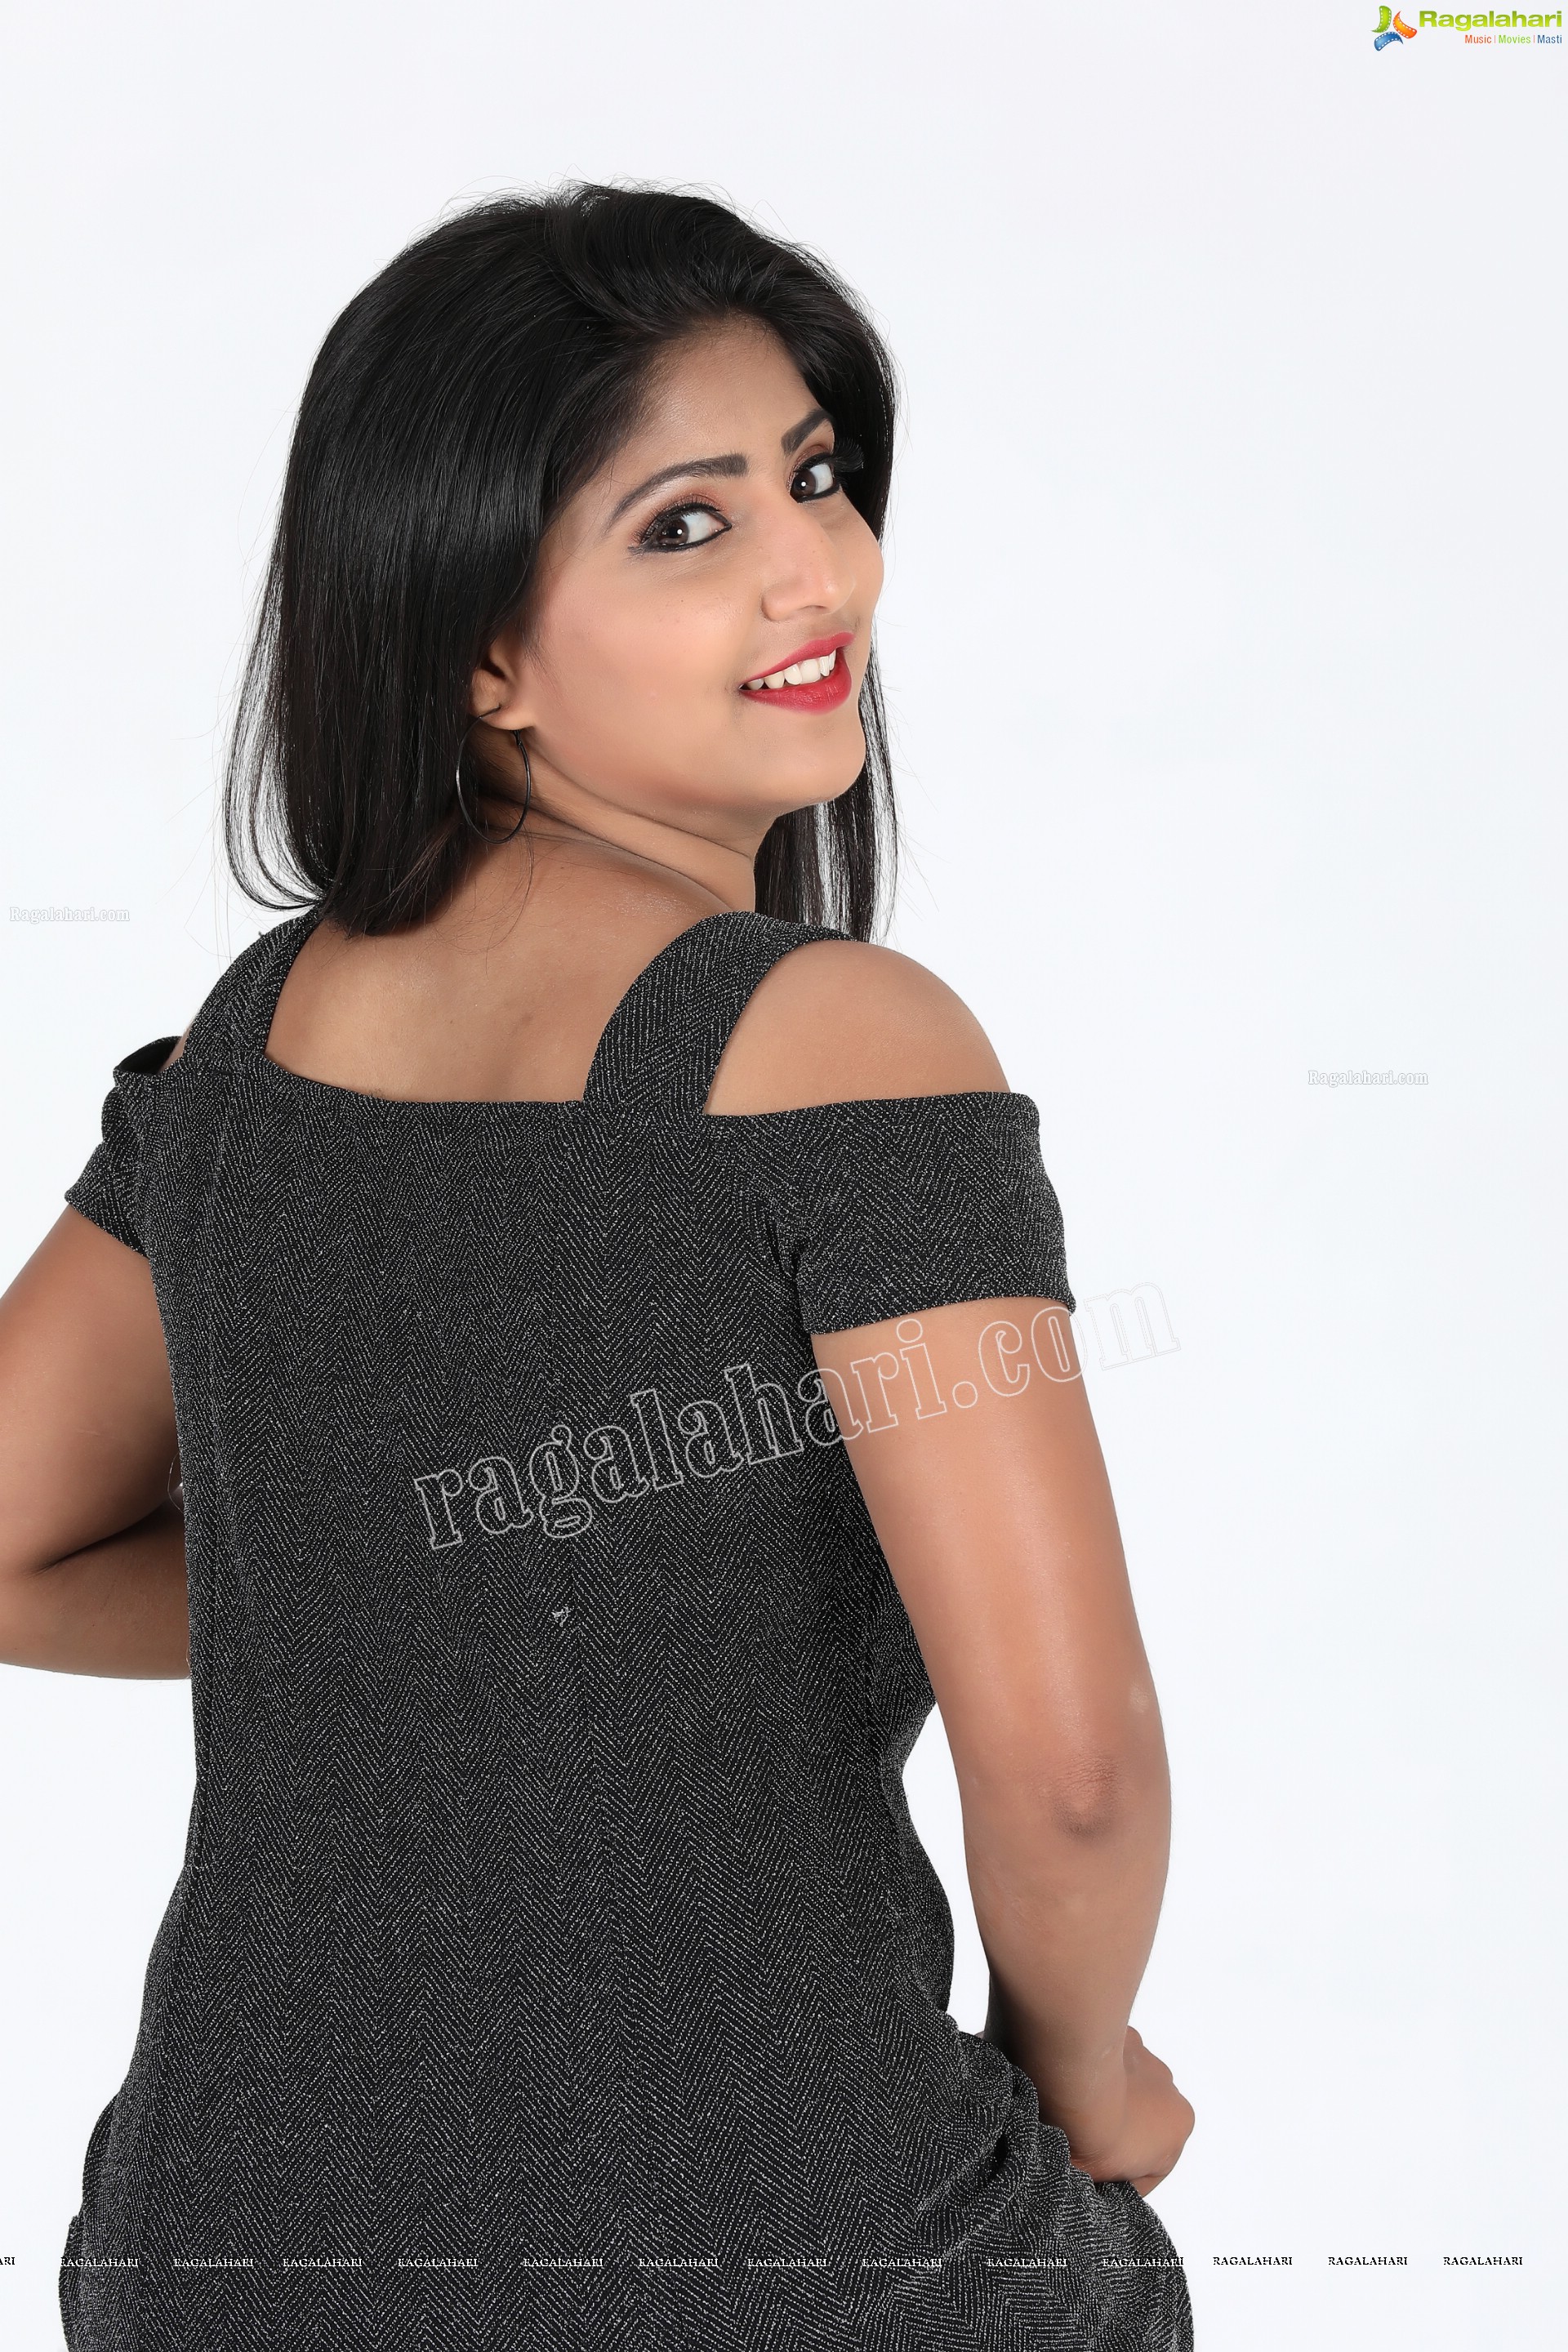 Shabeena Shaik in Carbon Black Bodycon Dress Exclusive Photo Shoot